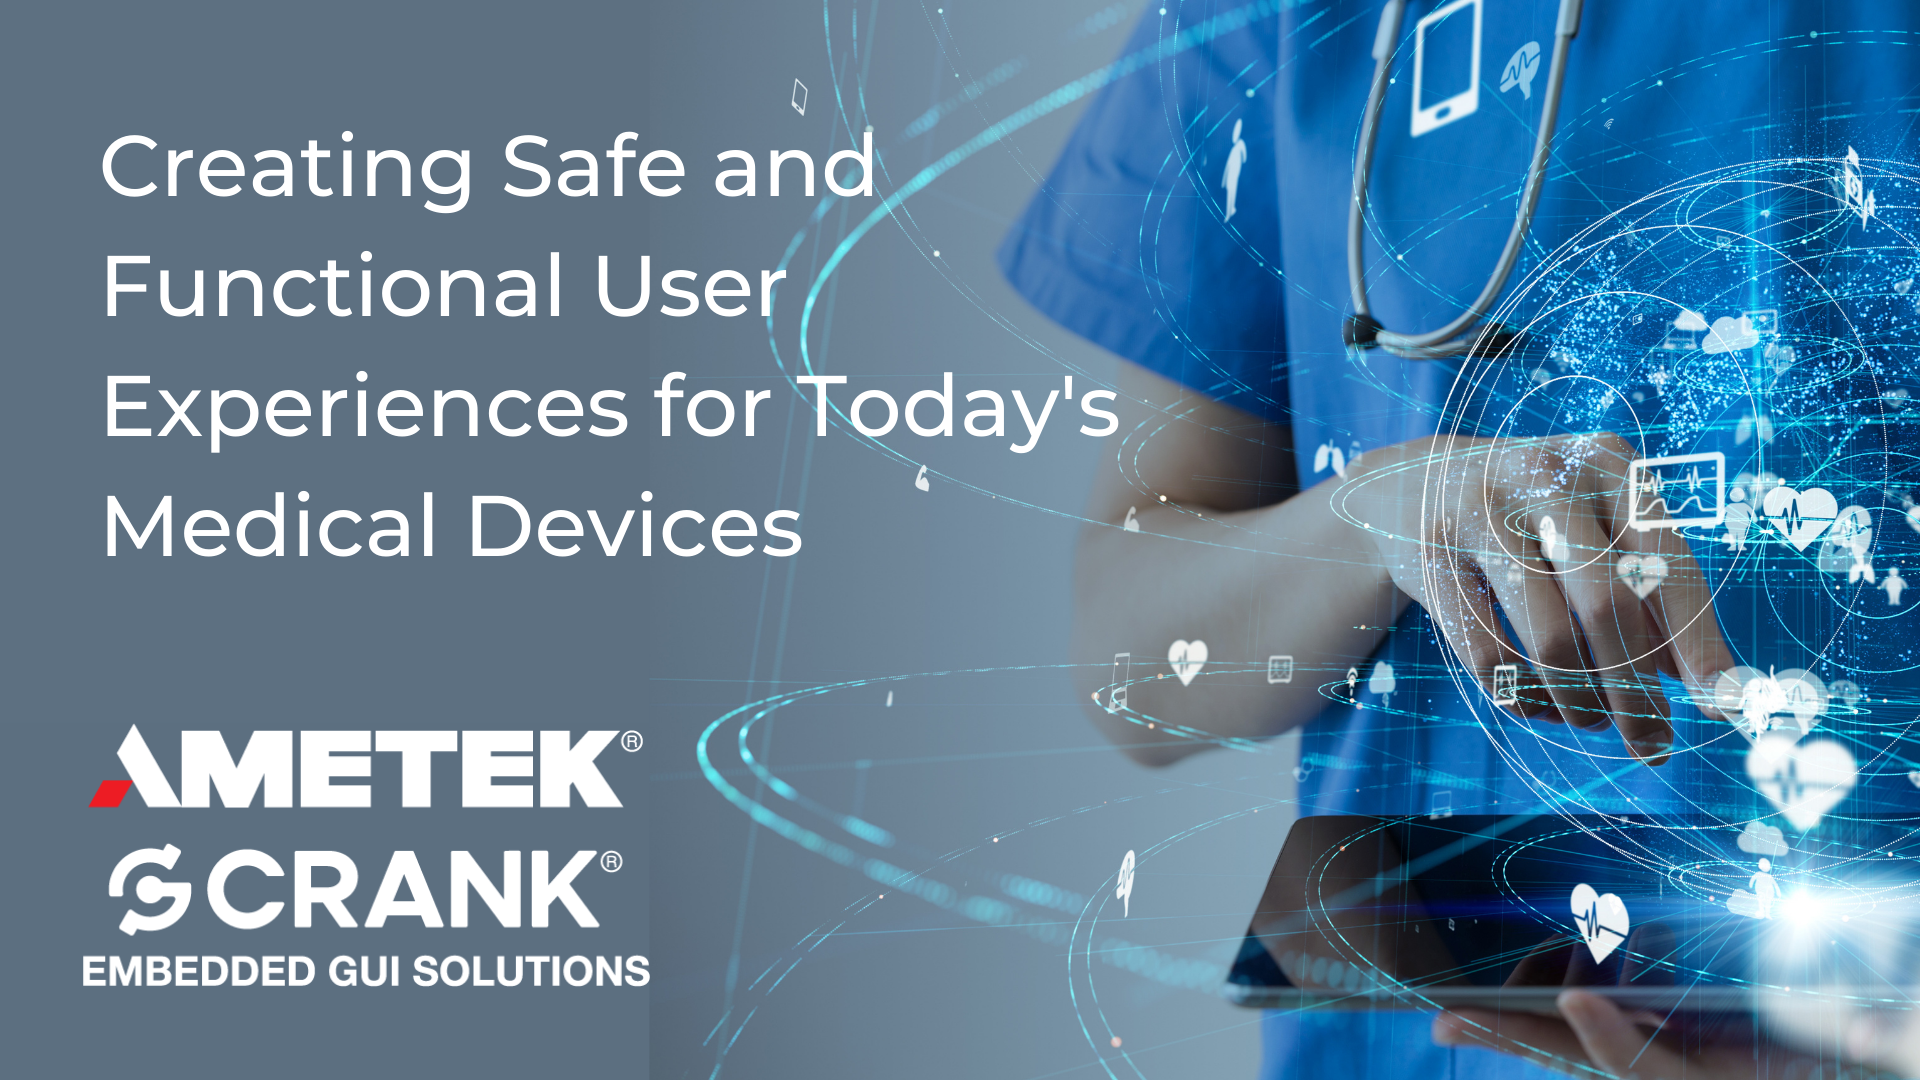 AMTEK Crank | Webinar | Creating safe and functional user experiences for medical devices